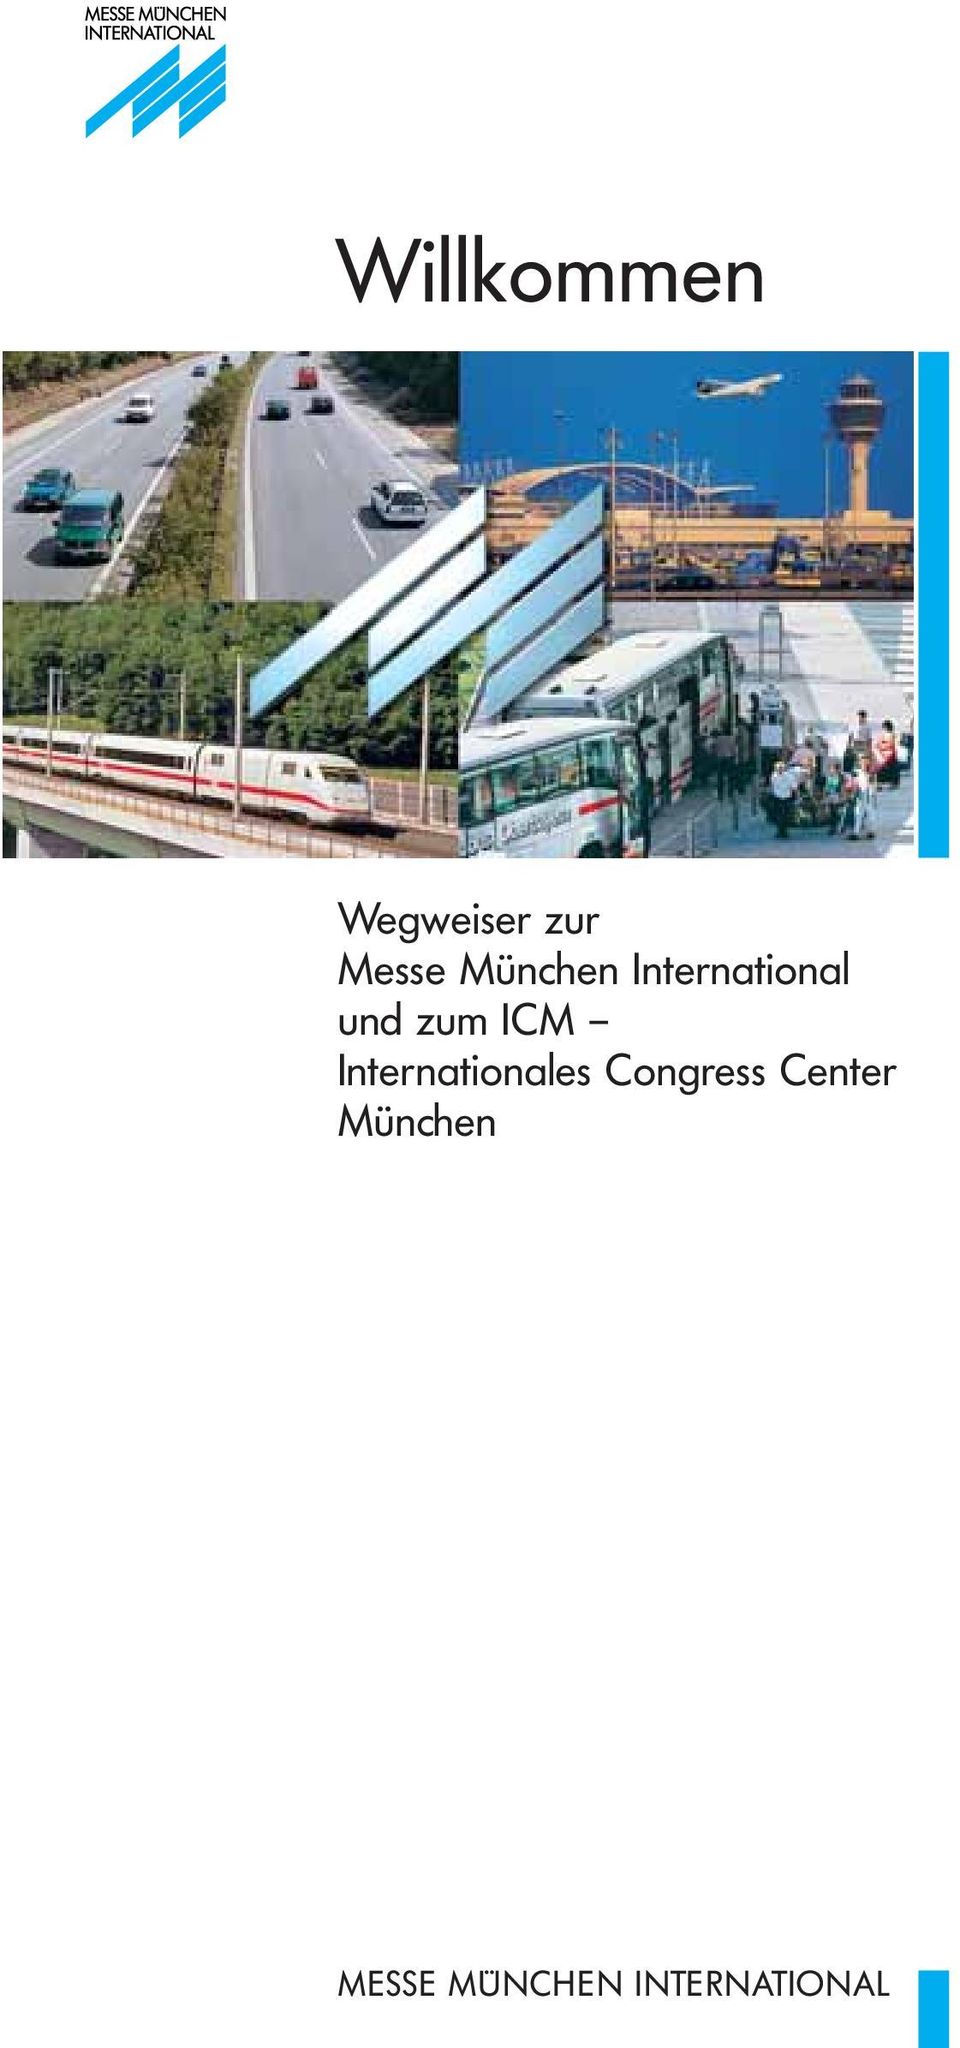 ICM Internationales Congress